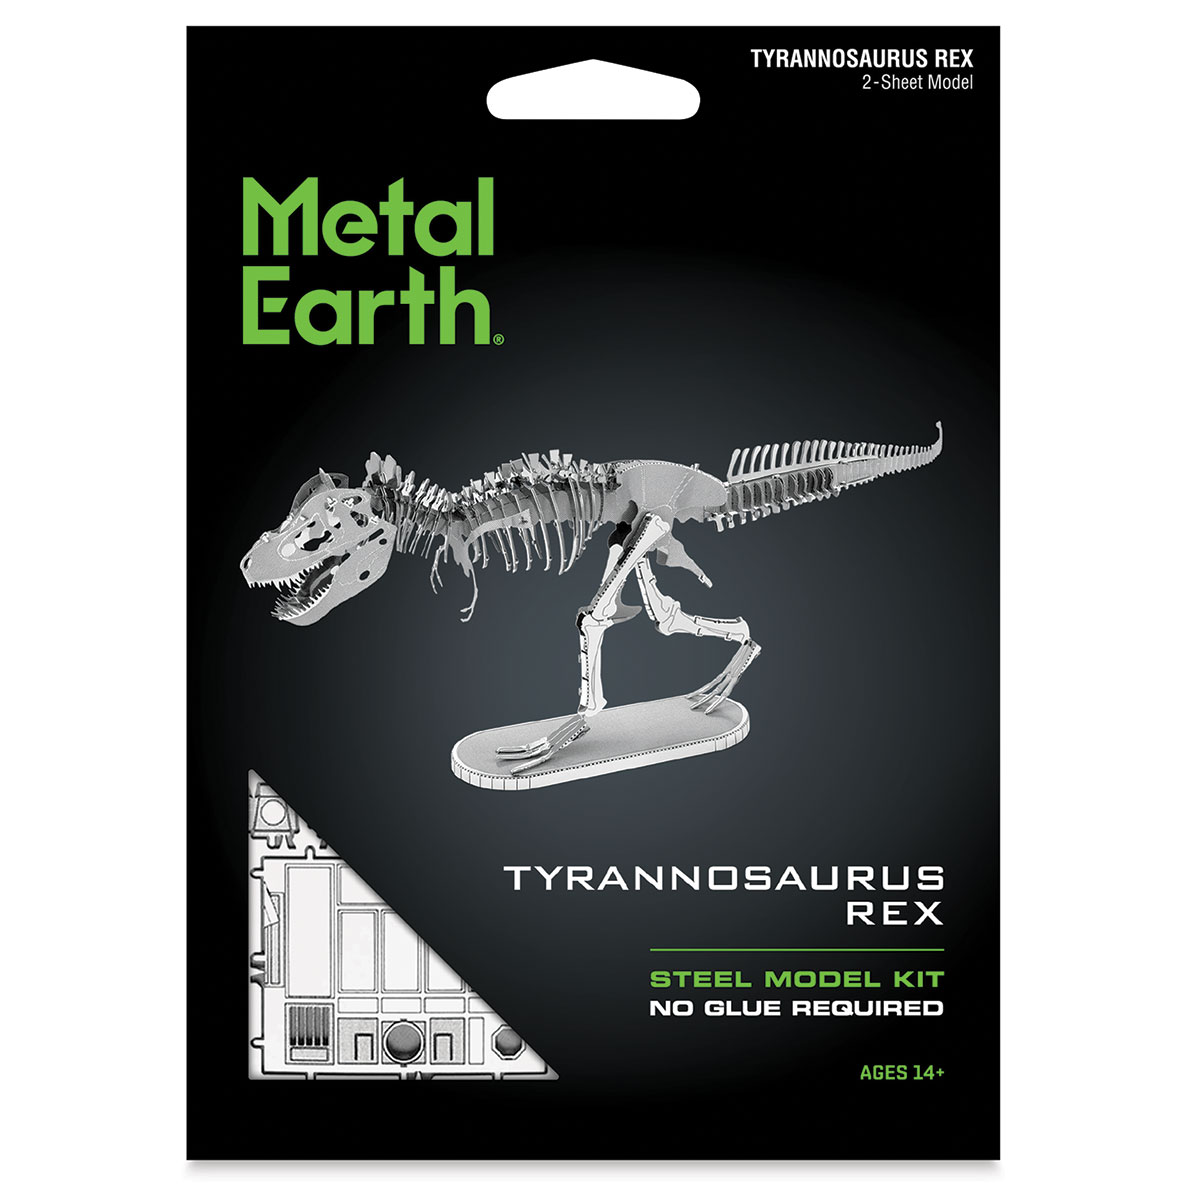 Maquetum dinossauro t rex esqueleto metalearth